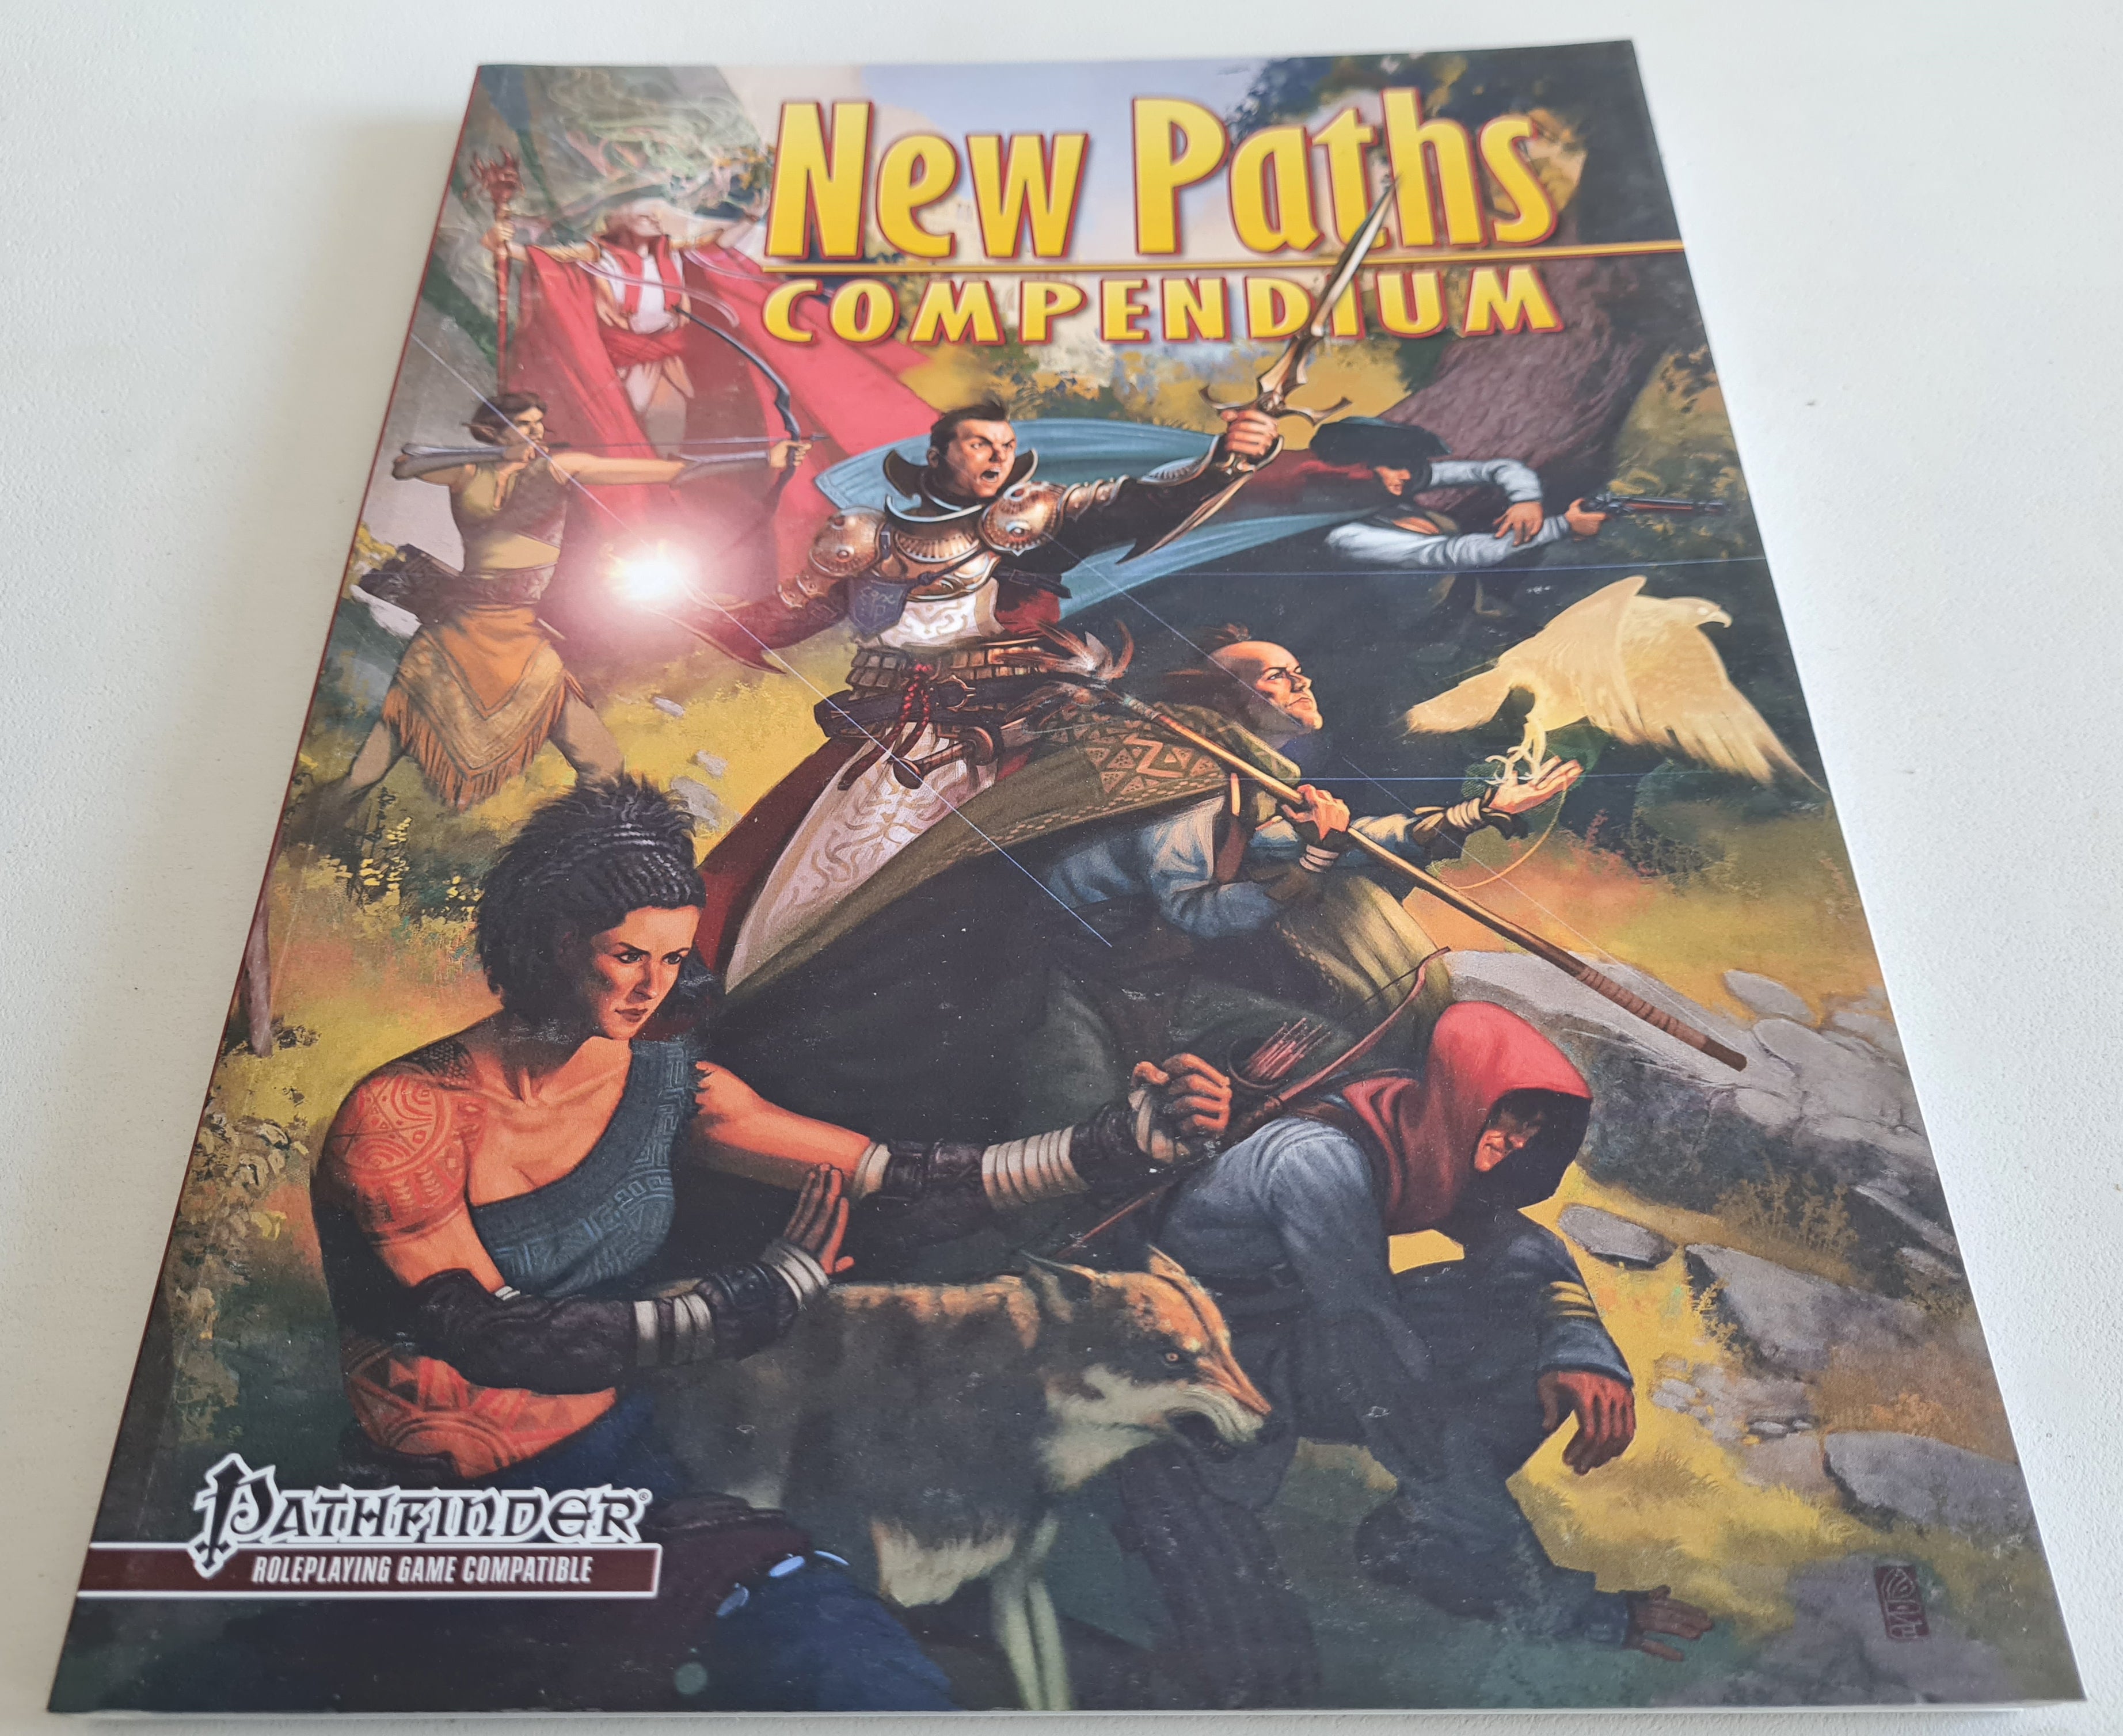 Pathfinder: New Paths Compendium